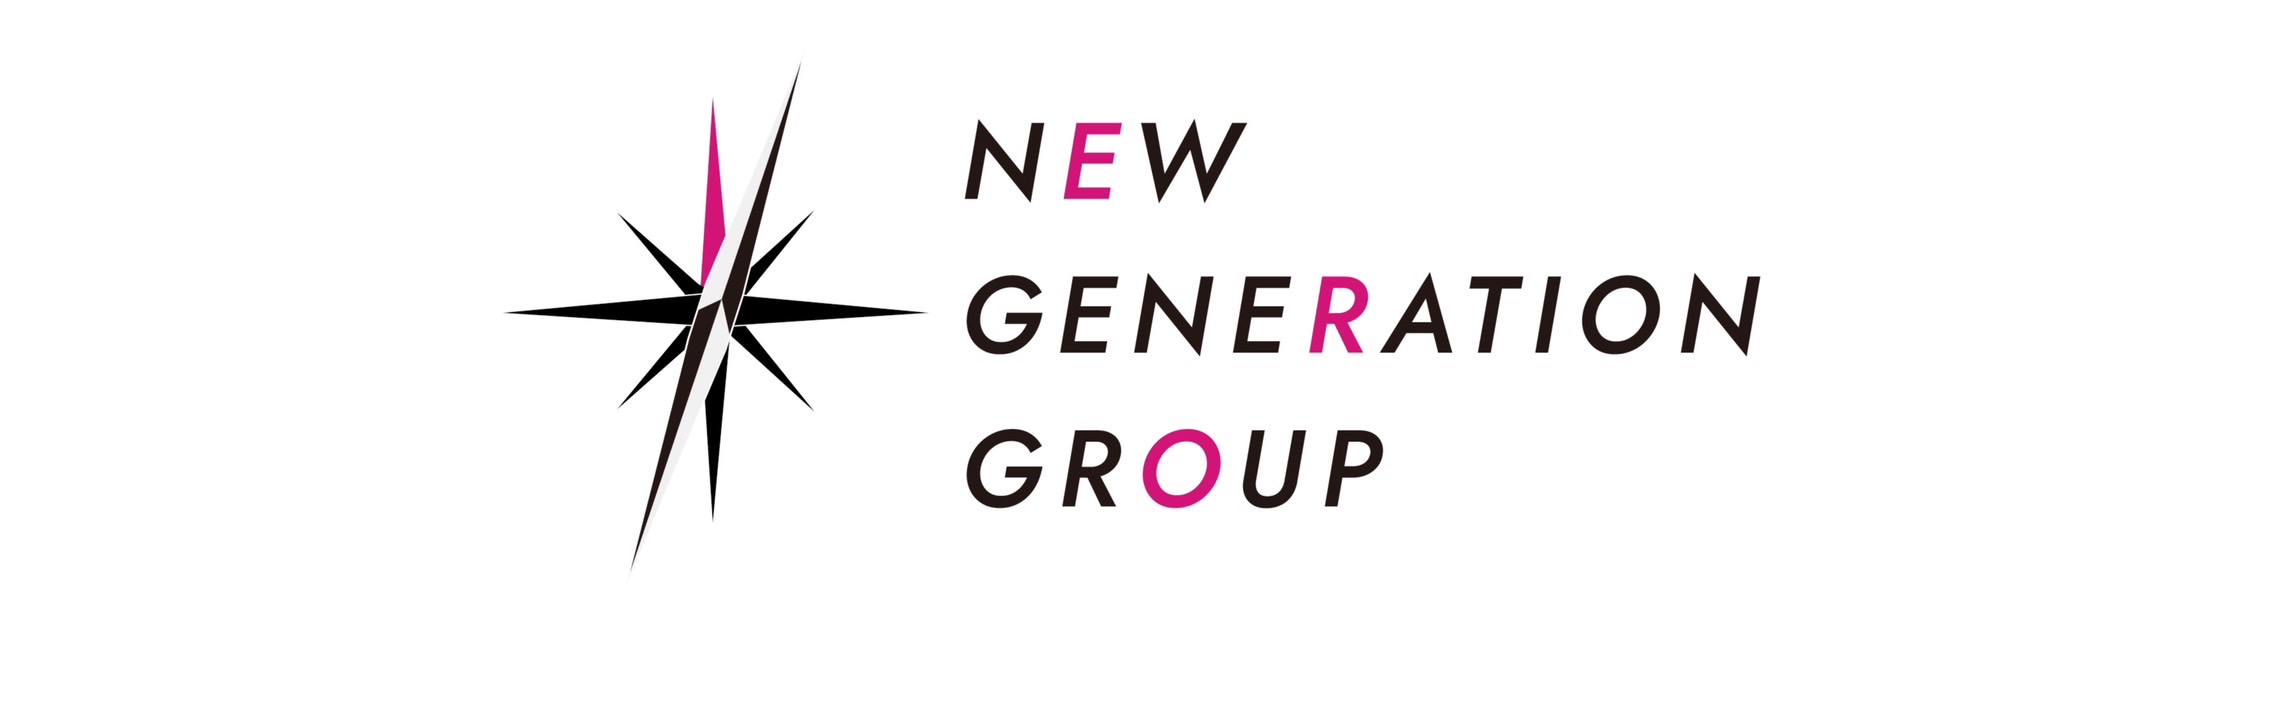 NEW GENERATION GROUP バナー